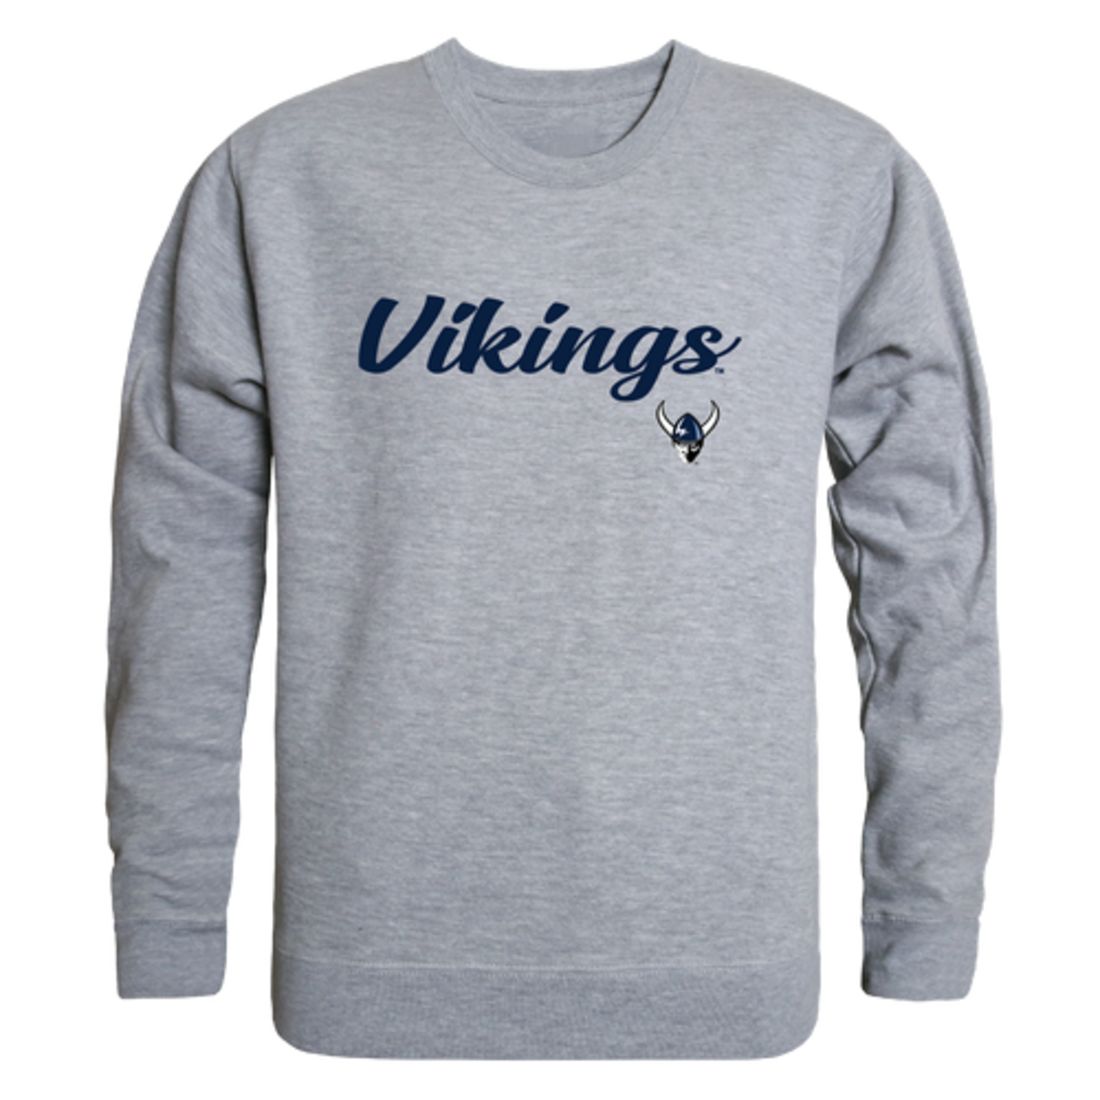 WWU Western Washington University Vikings Script Crewneck Pullover Sweatshirt Sweater Black-Campus-Wardrobe